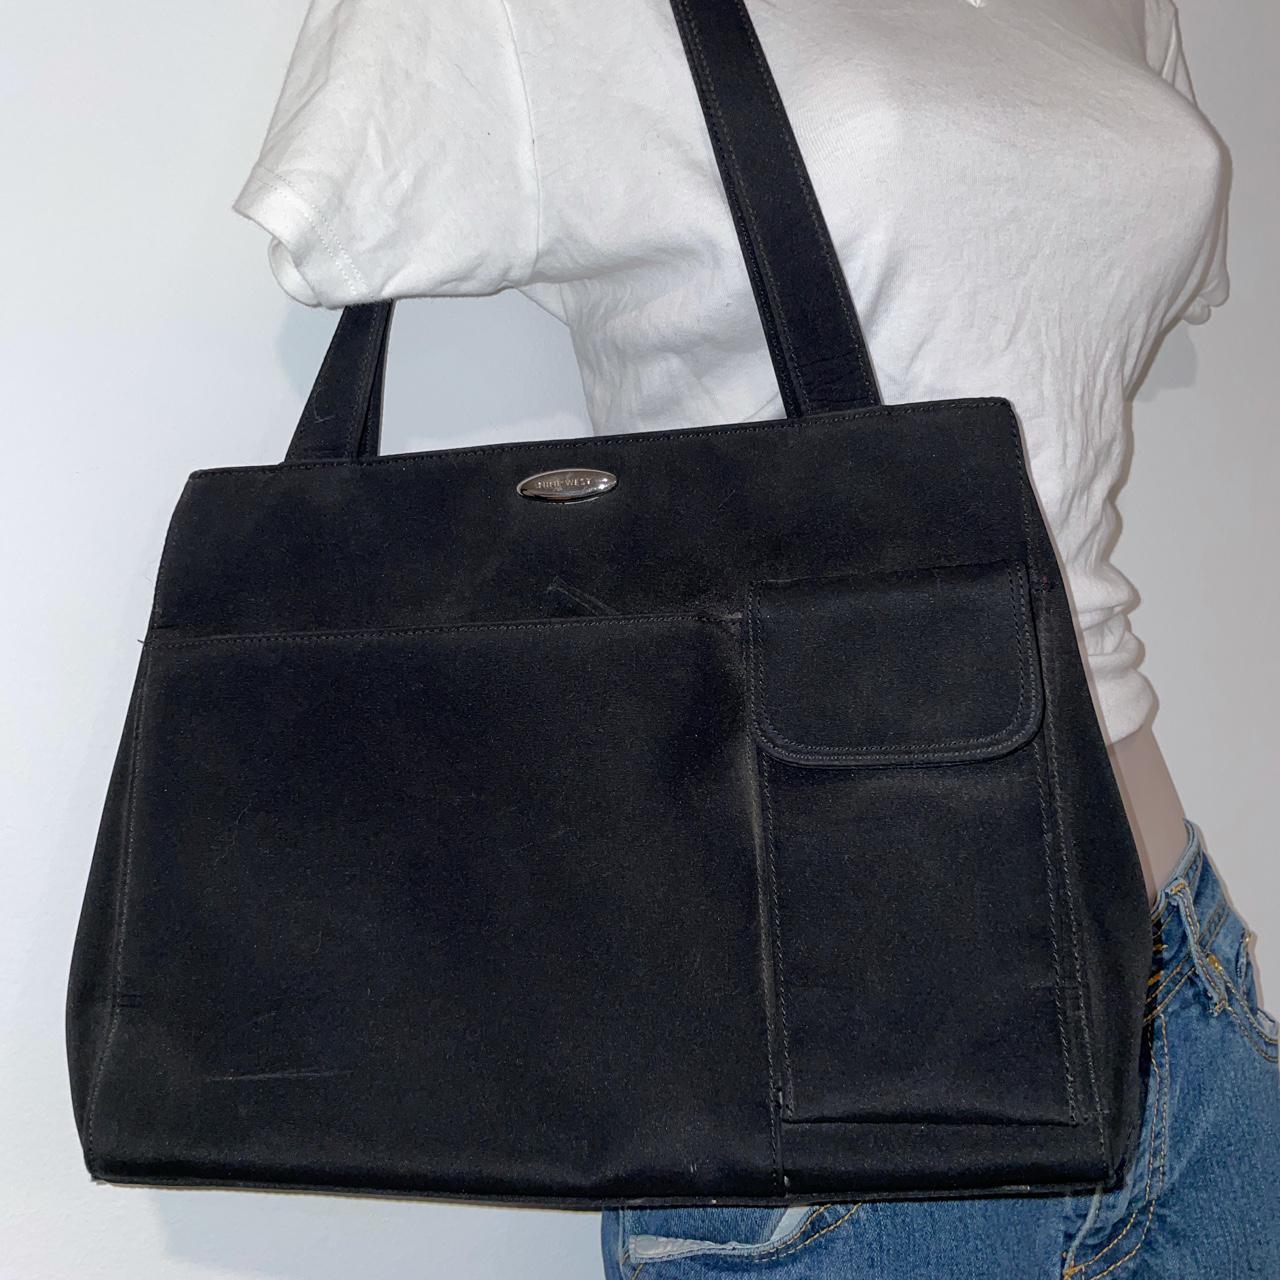 Product Image 2 - Nine West purse 🖤


Brand: Nine